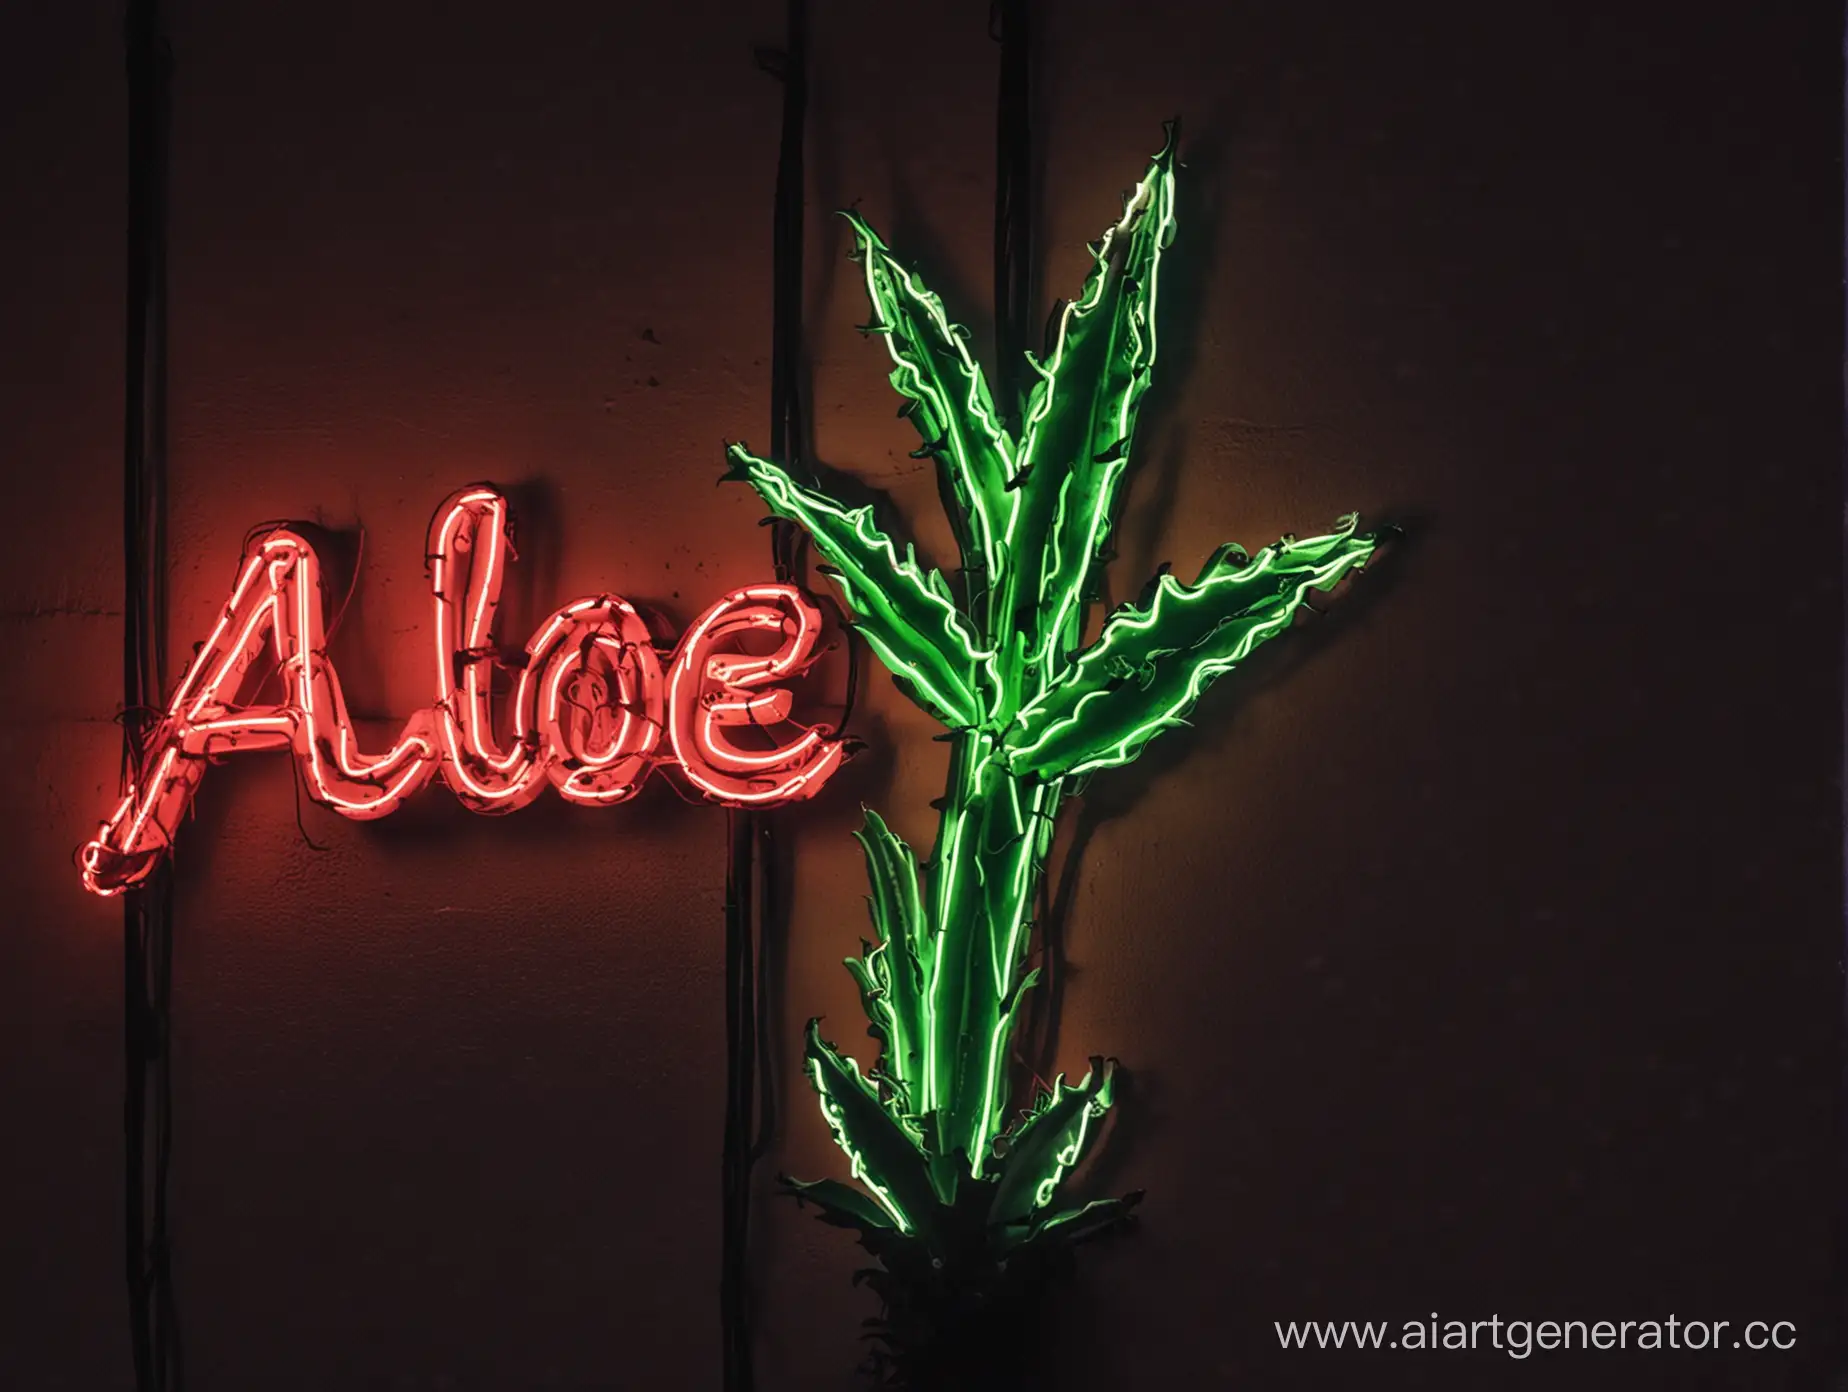 Vibrant-Neon-Aloe-Plant-Against-BloggerStyle-Background